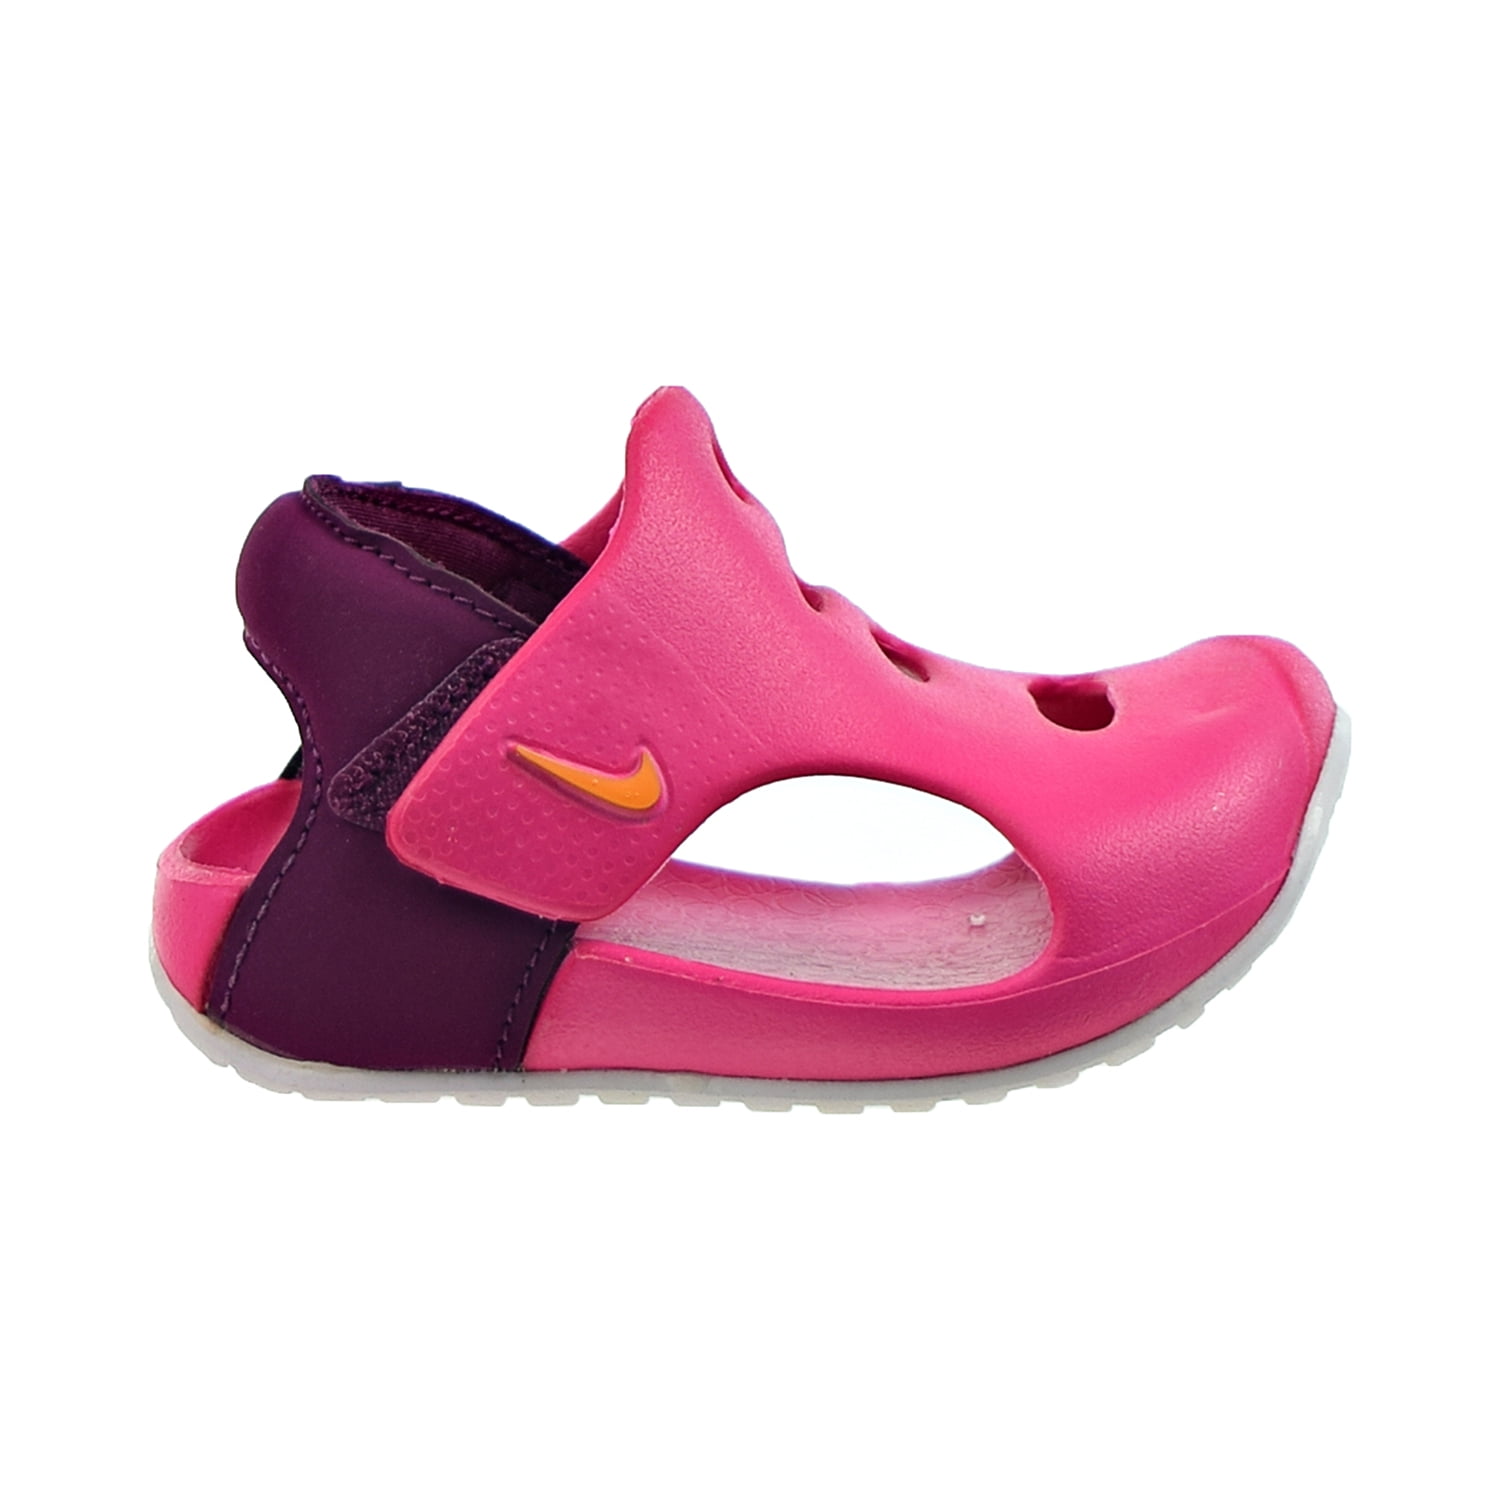 Nike Sunray 3 (TD) Toddler's Sandals Pink Prime-Sangria-White dh9465-602 - Walmart.com